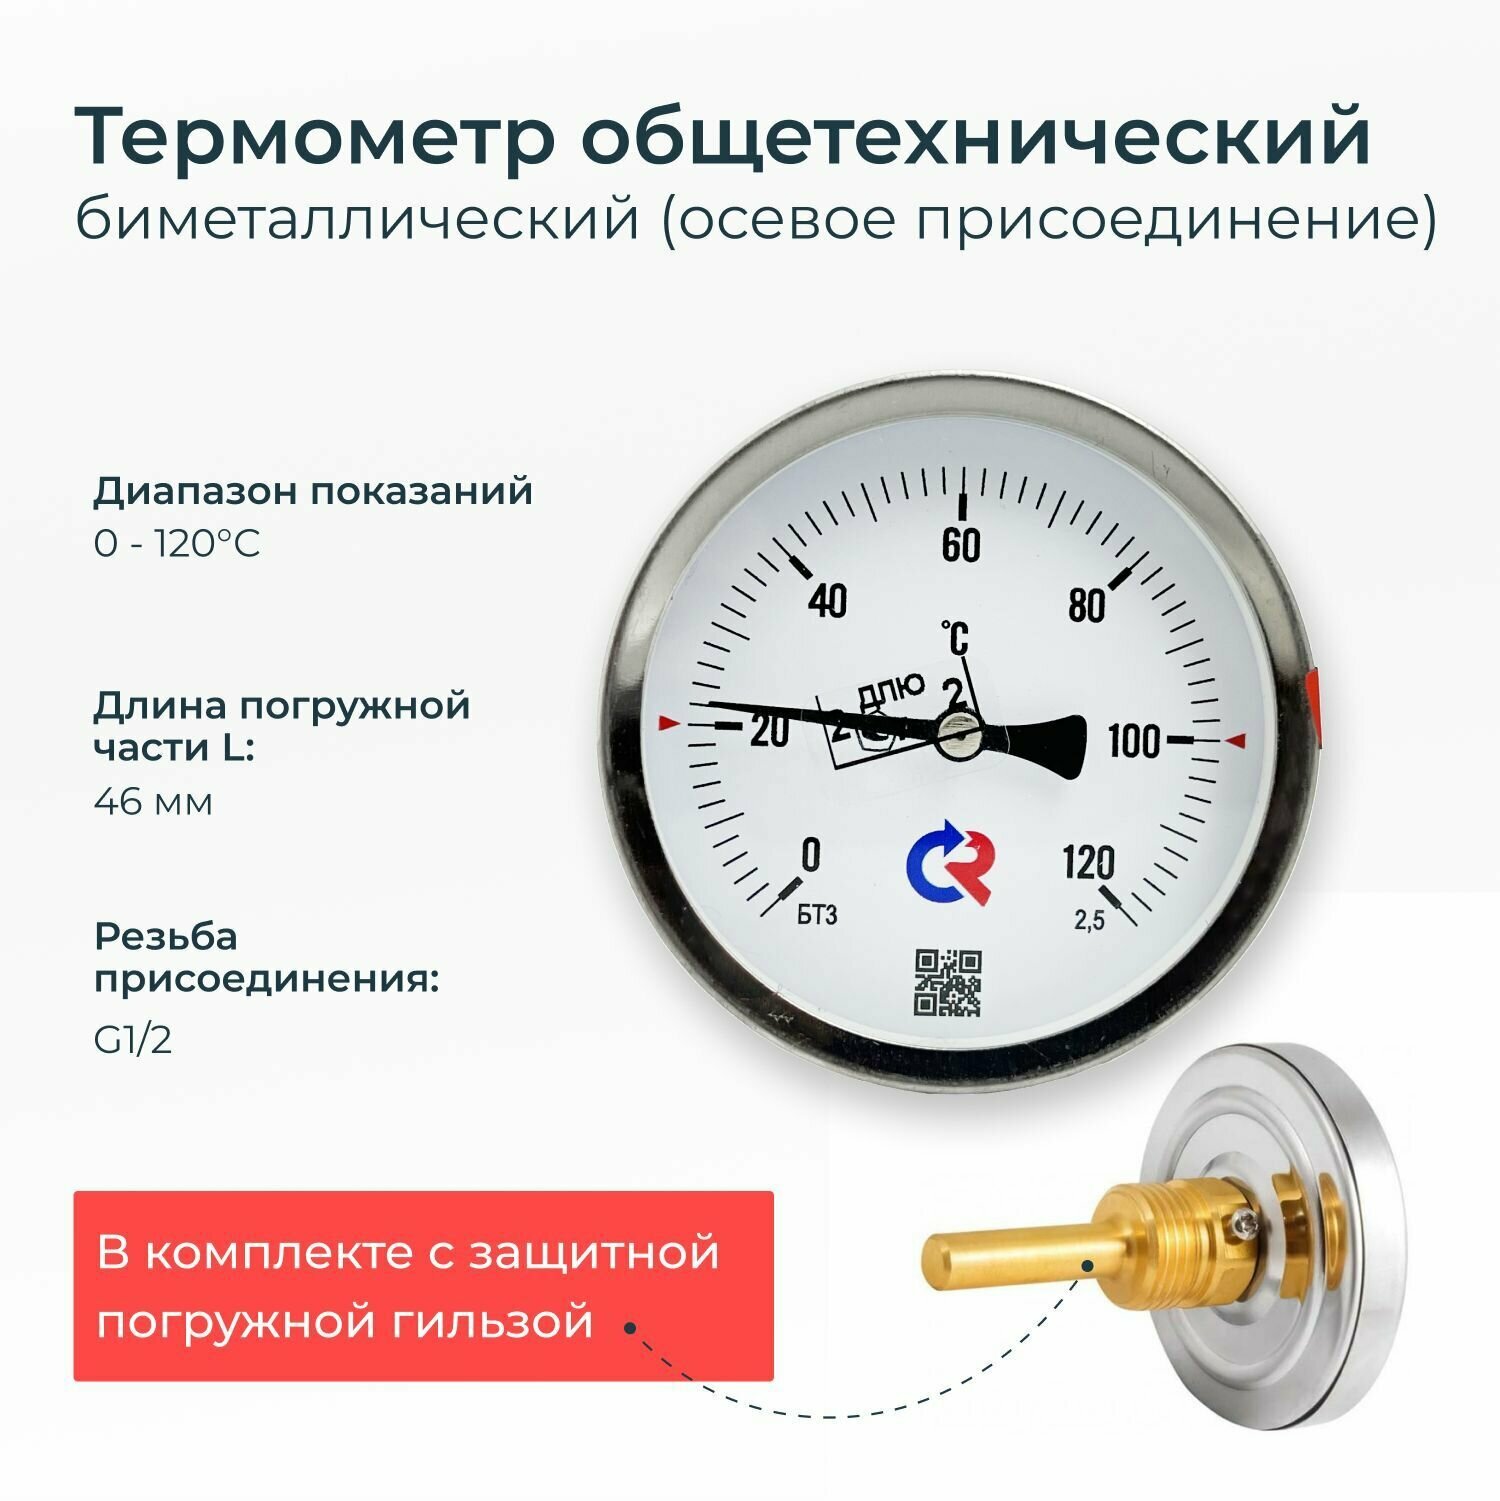 Термометр биметаллический БТ-31.211 (0-120 С) длина штока 46 мм. резьба G1/2